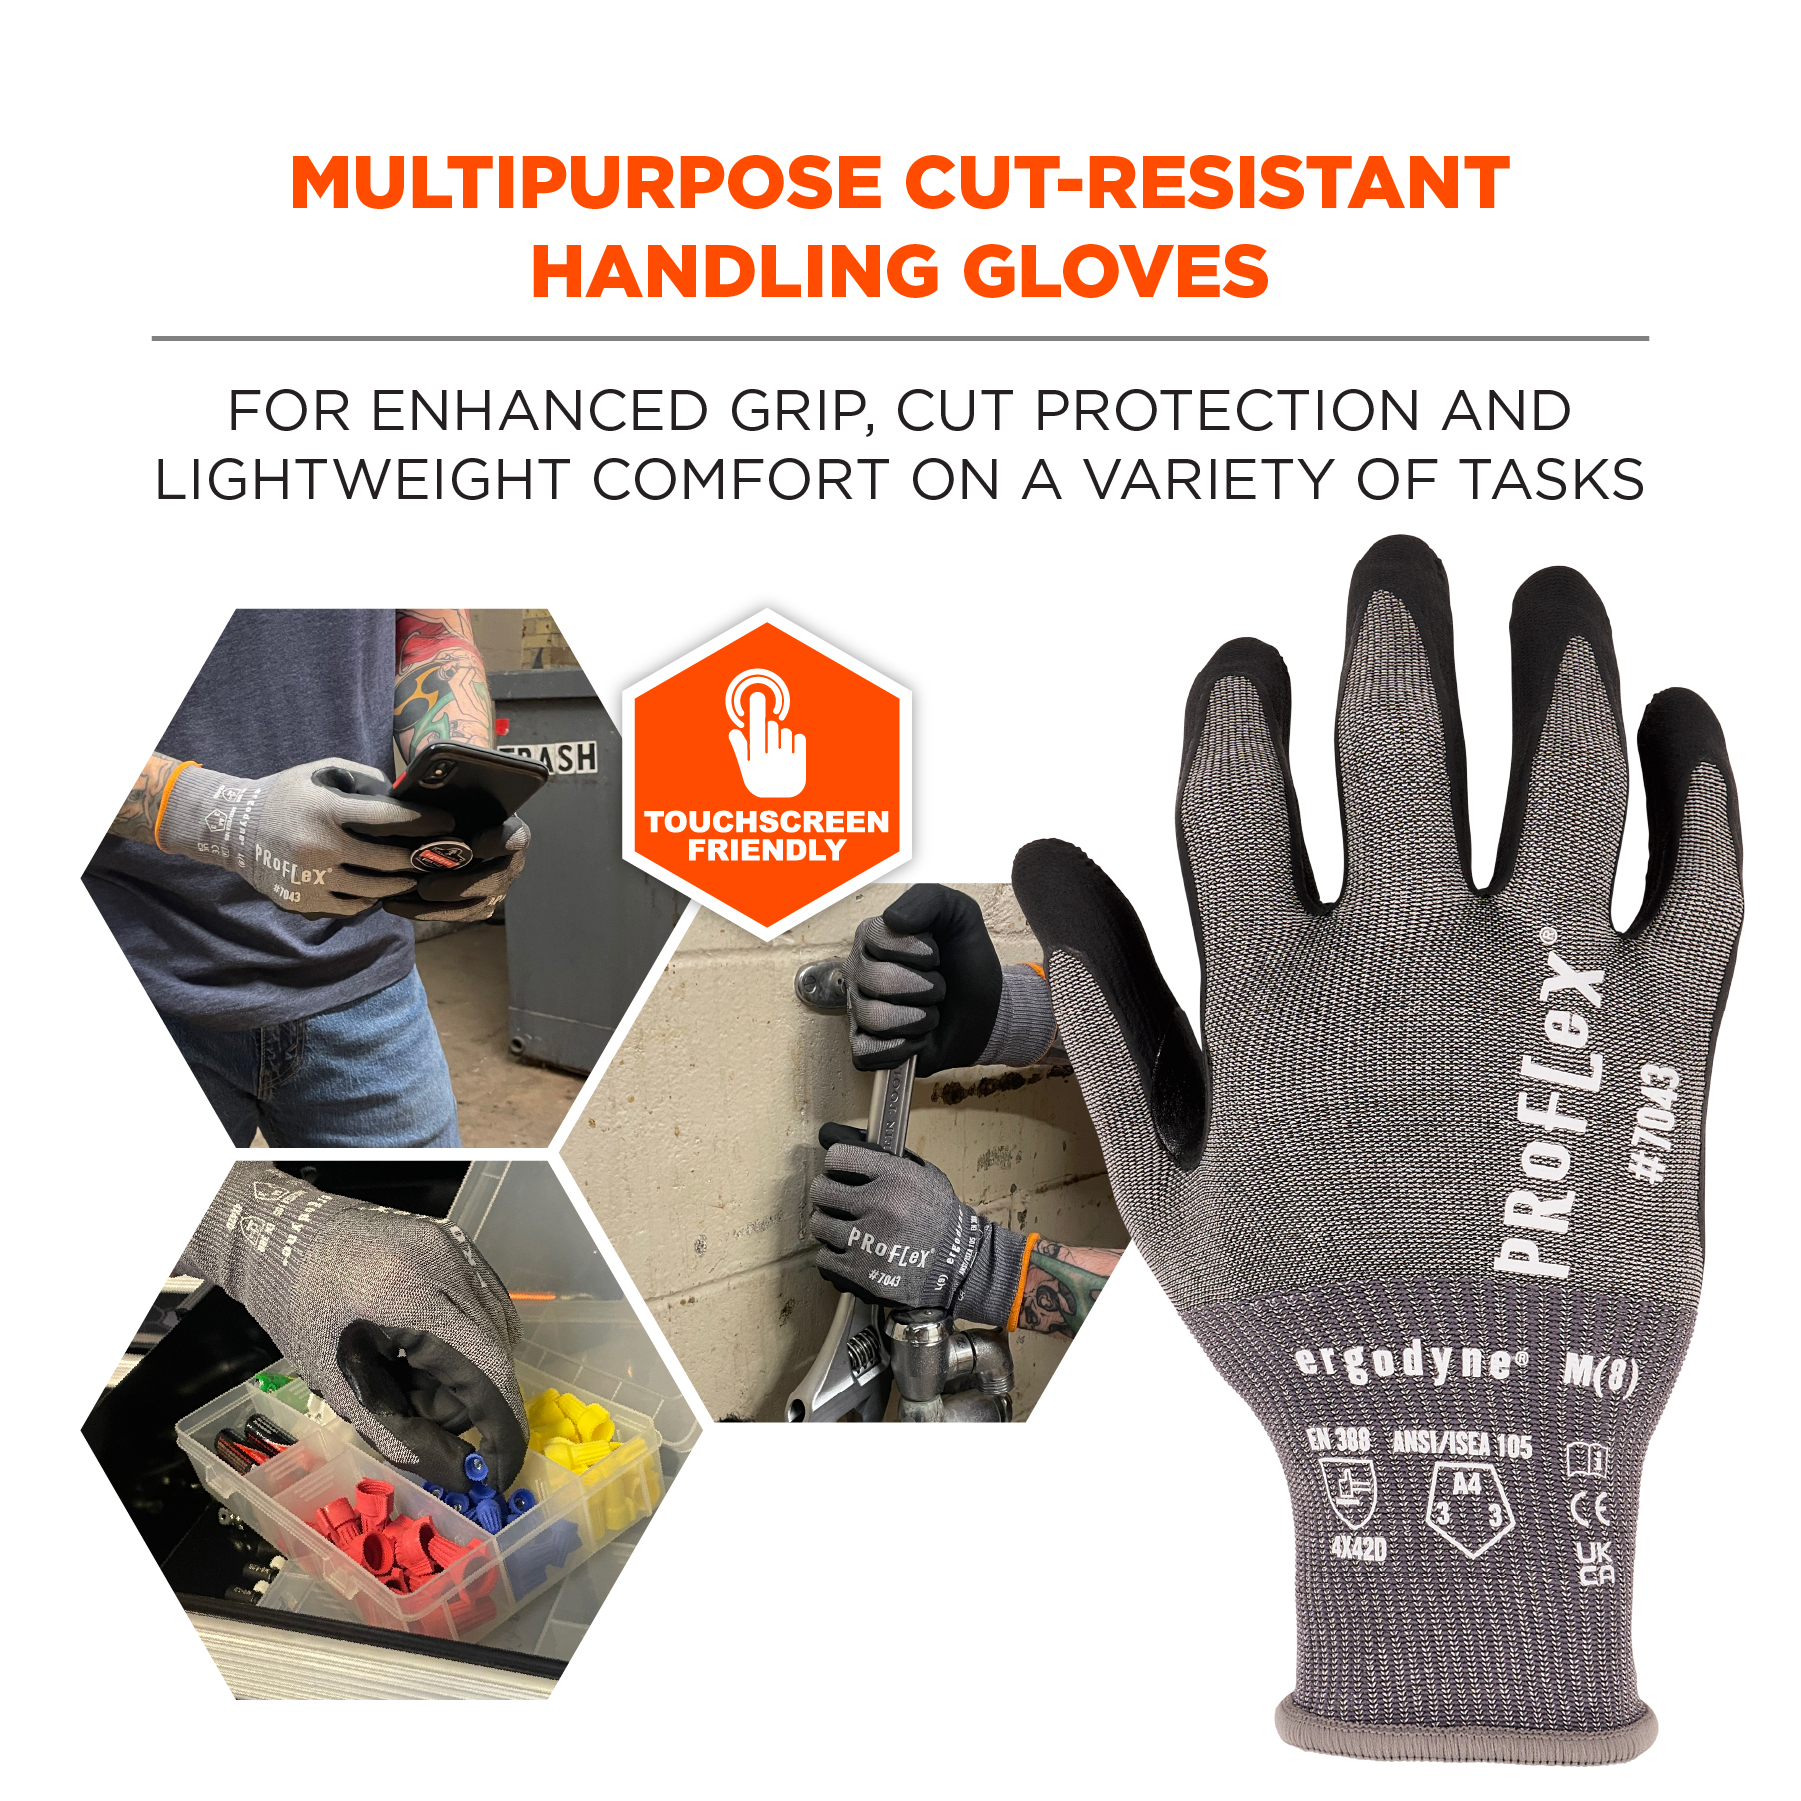 https://www.ergodyne.com/sites/default/files/product-images/10522-7043-nitrile-coated-cut-resistant-gloves-multipurpose-cut-resistant-handling-gloves-small.jpg